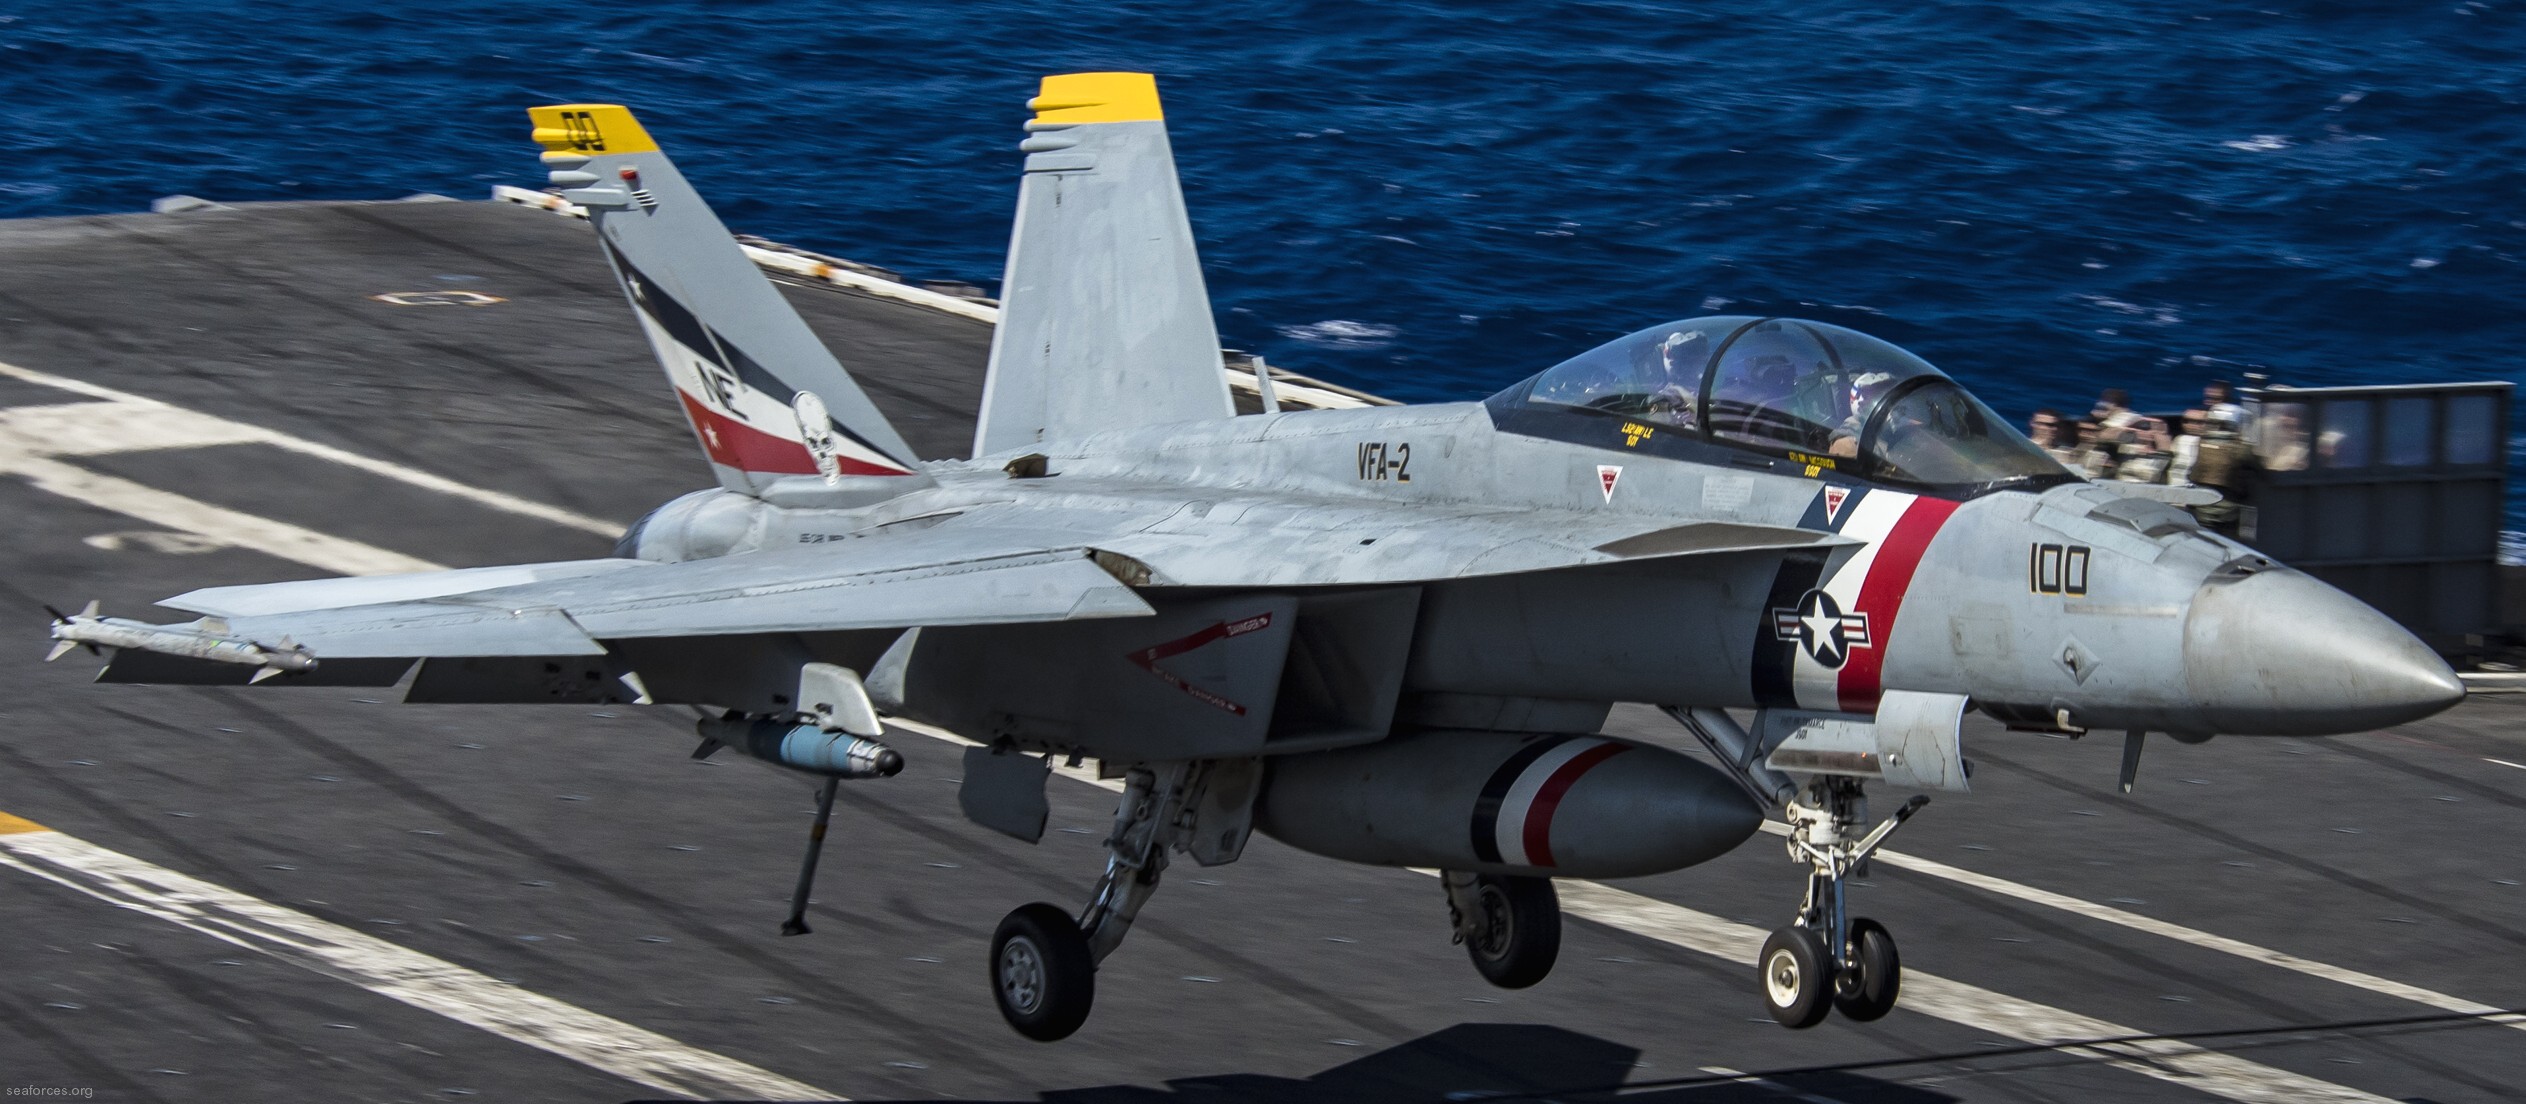 vfa-2 bounty hunters strike fighter squadron us navy f/a-18f super hornet carrier air wing cvw-2 uss carl vinson cvn-70 43